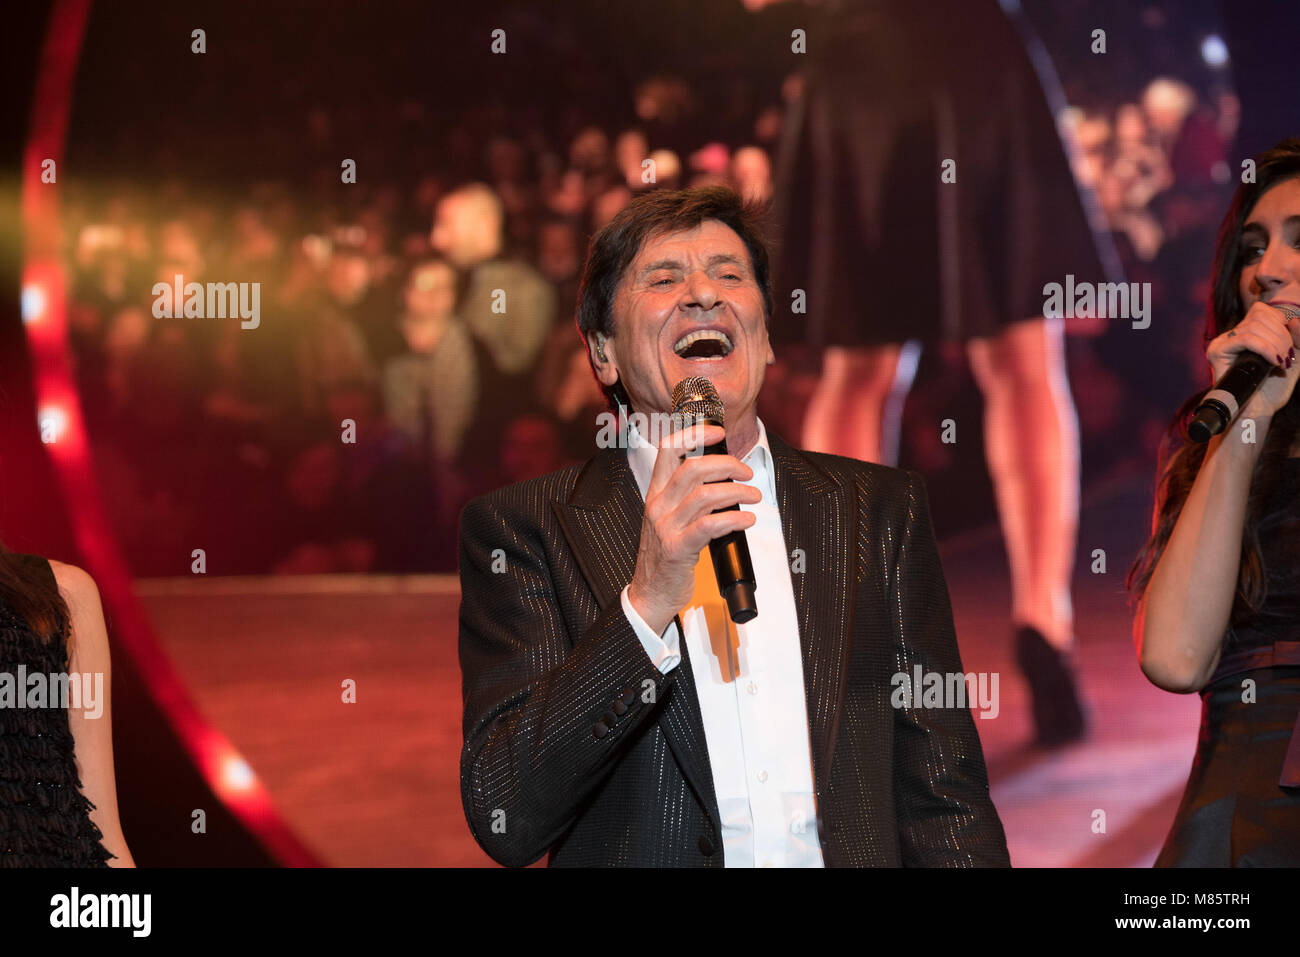 Gianni Morandi in Konzert in Neapel Etappe dieser Tour, in der die berühmte Künstlerin präsentiert sein neues Album D'amore d'Autore" im November 2017 freigegeben. 13.03.2018, Neapel, Italien Stockfoto